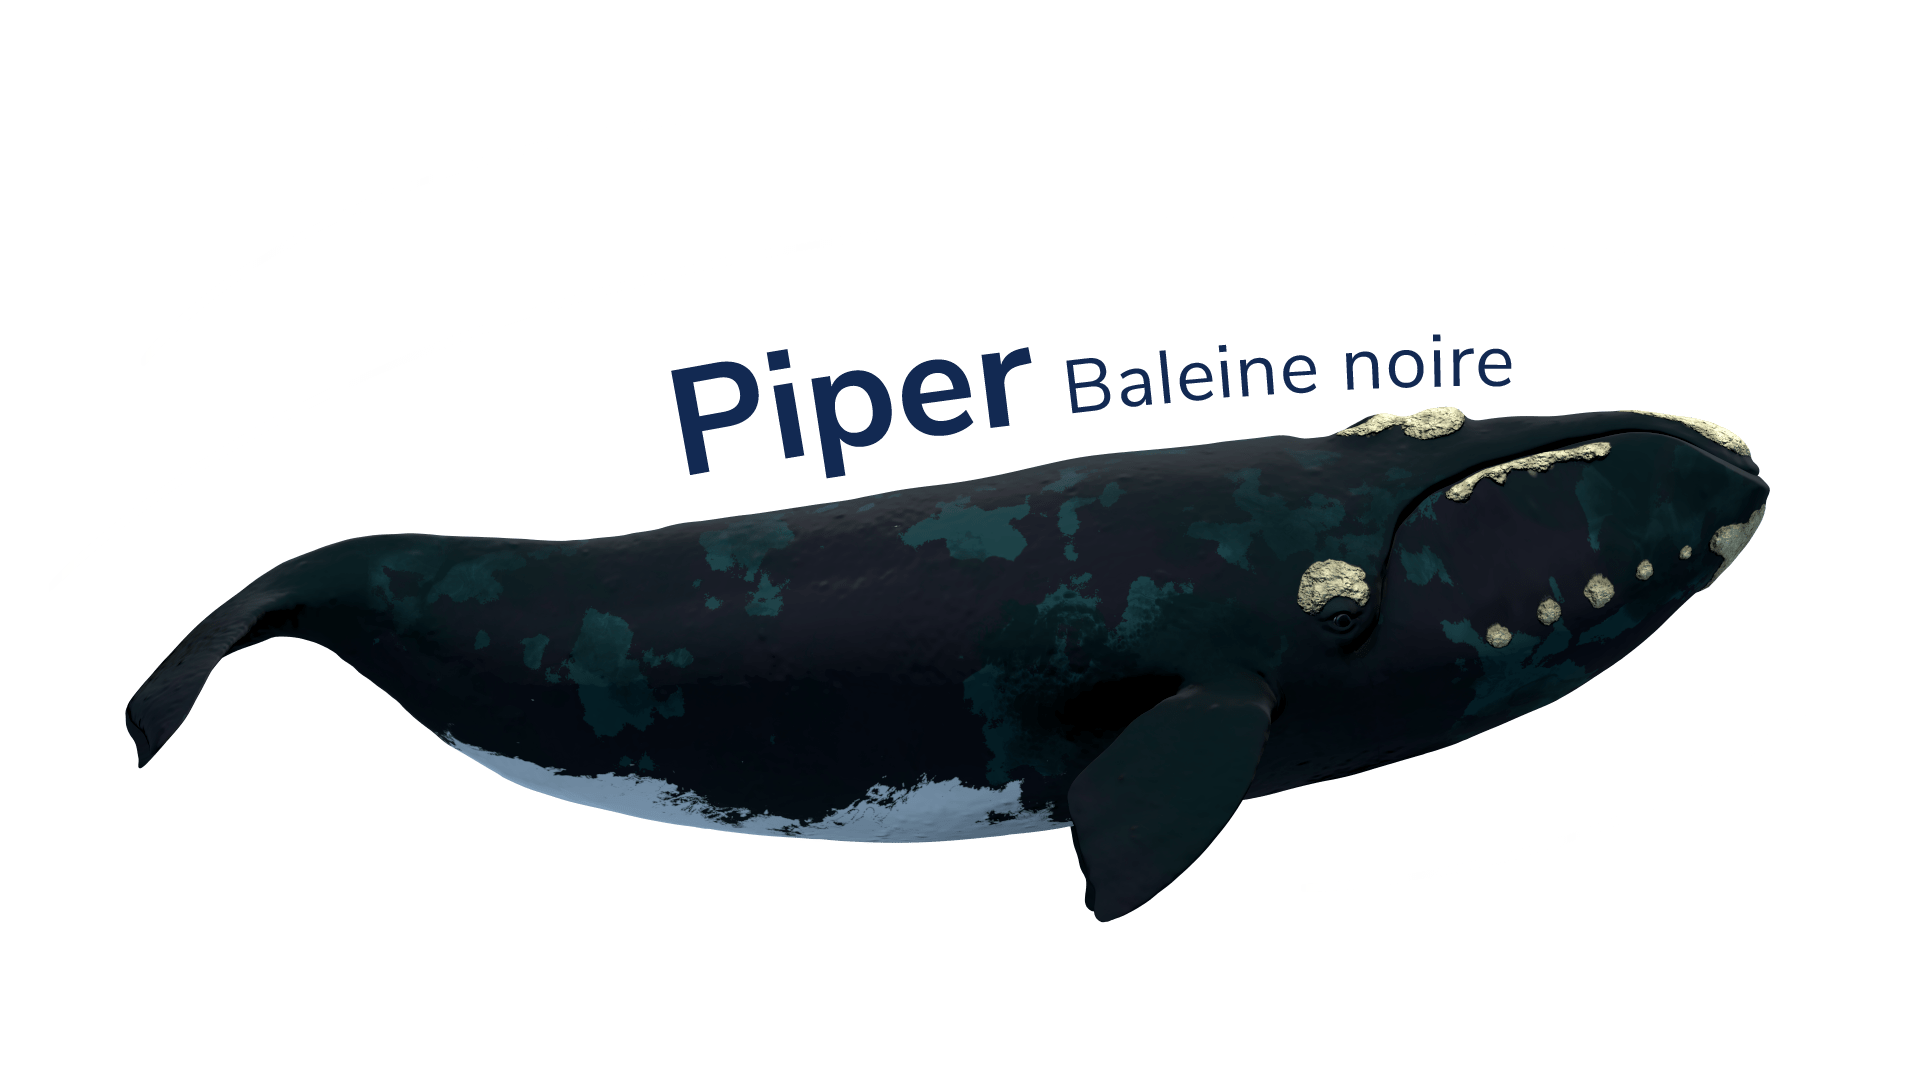 Piper la baleine noire